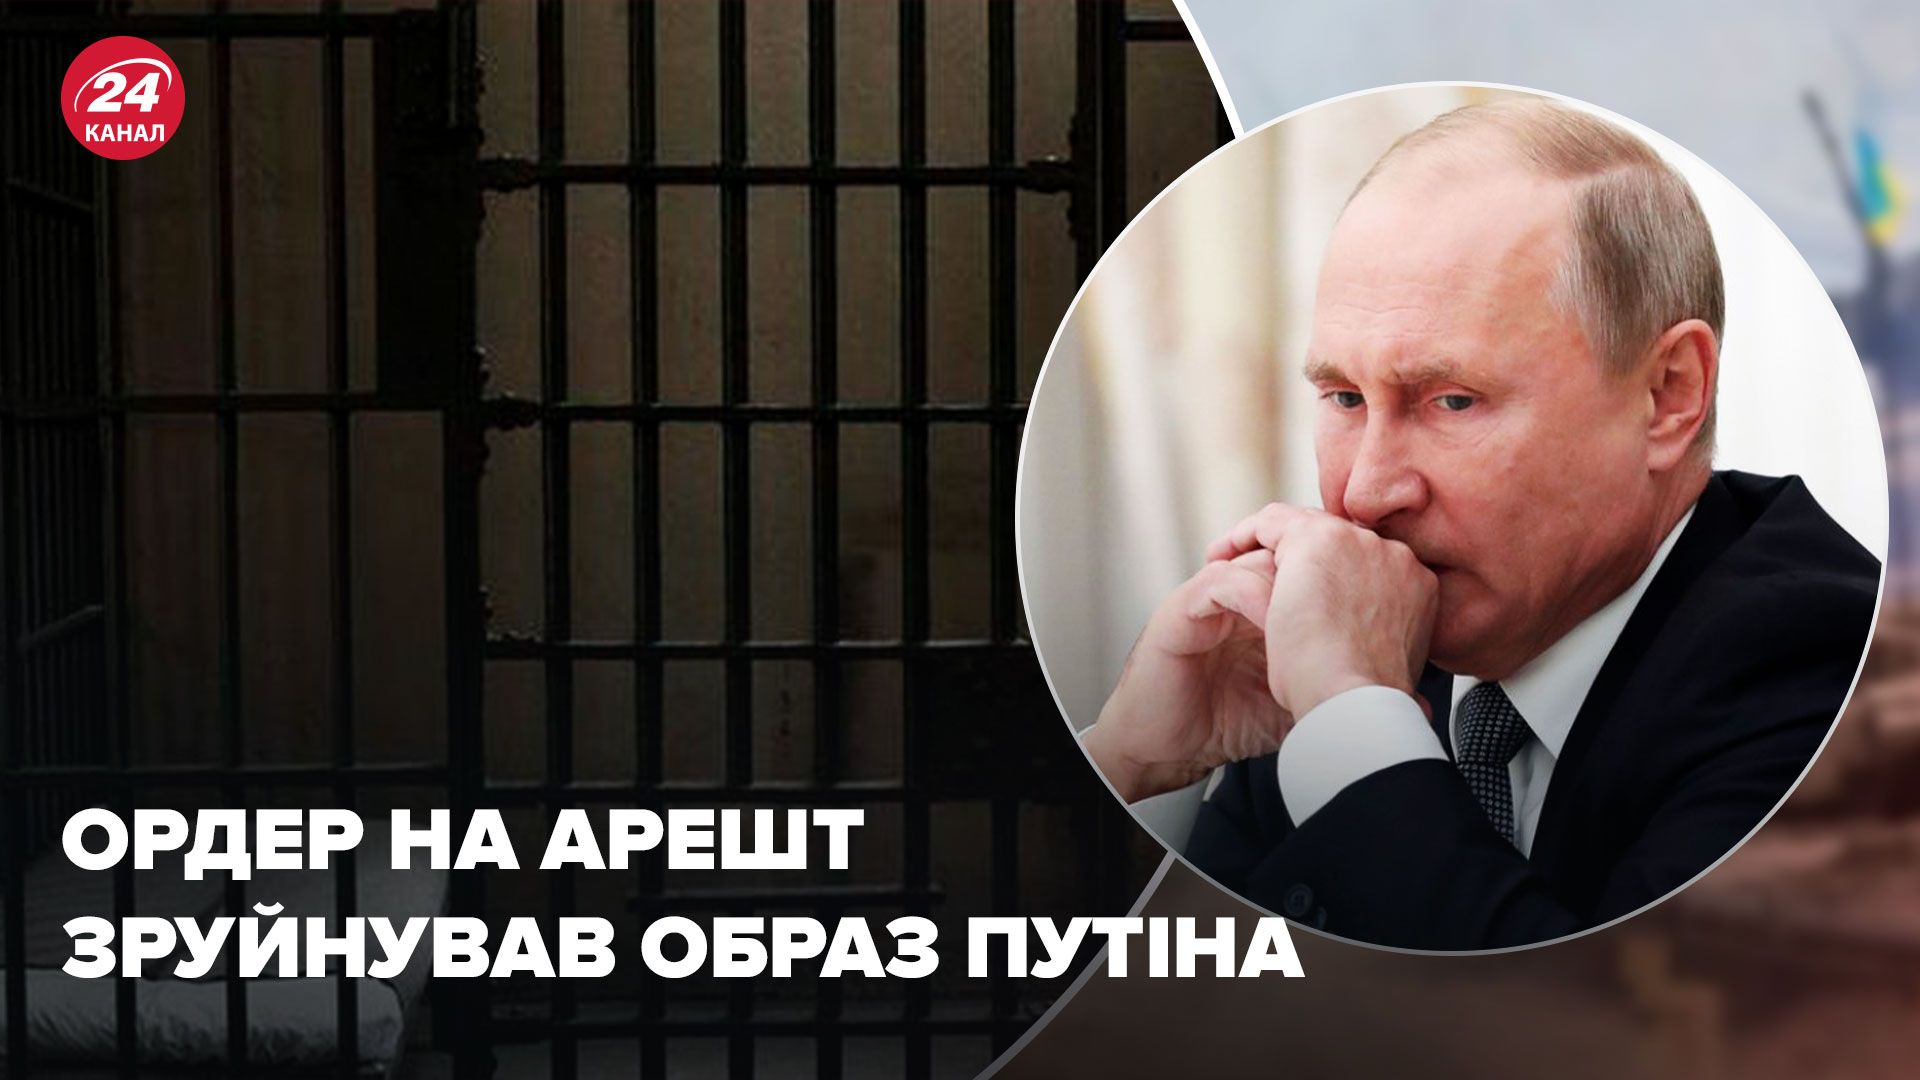 Путін Гаага - як ордер на арешт вплинув на Путіна та режим - 24 Канал